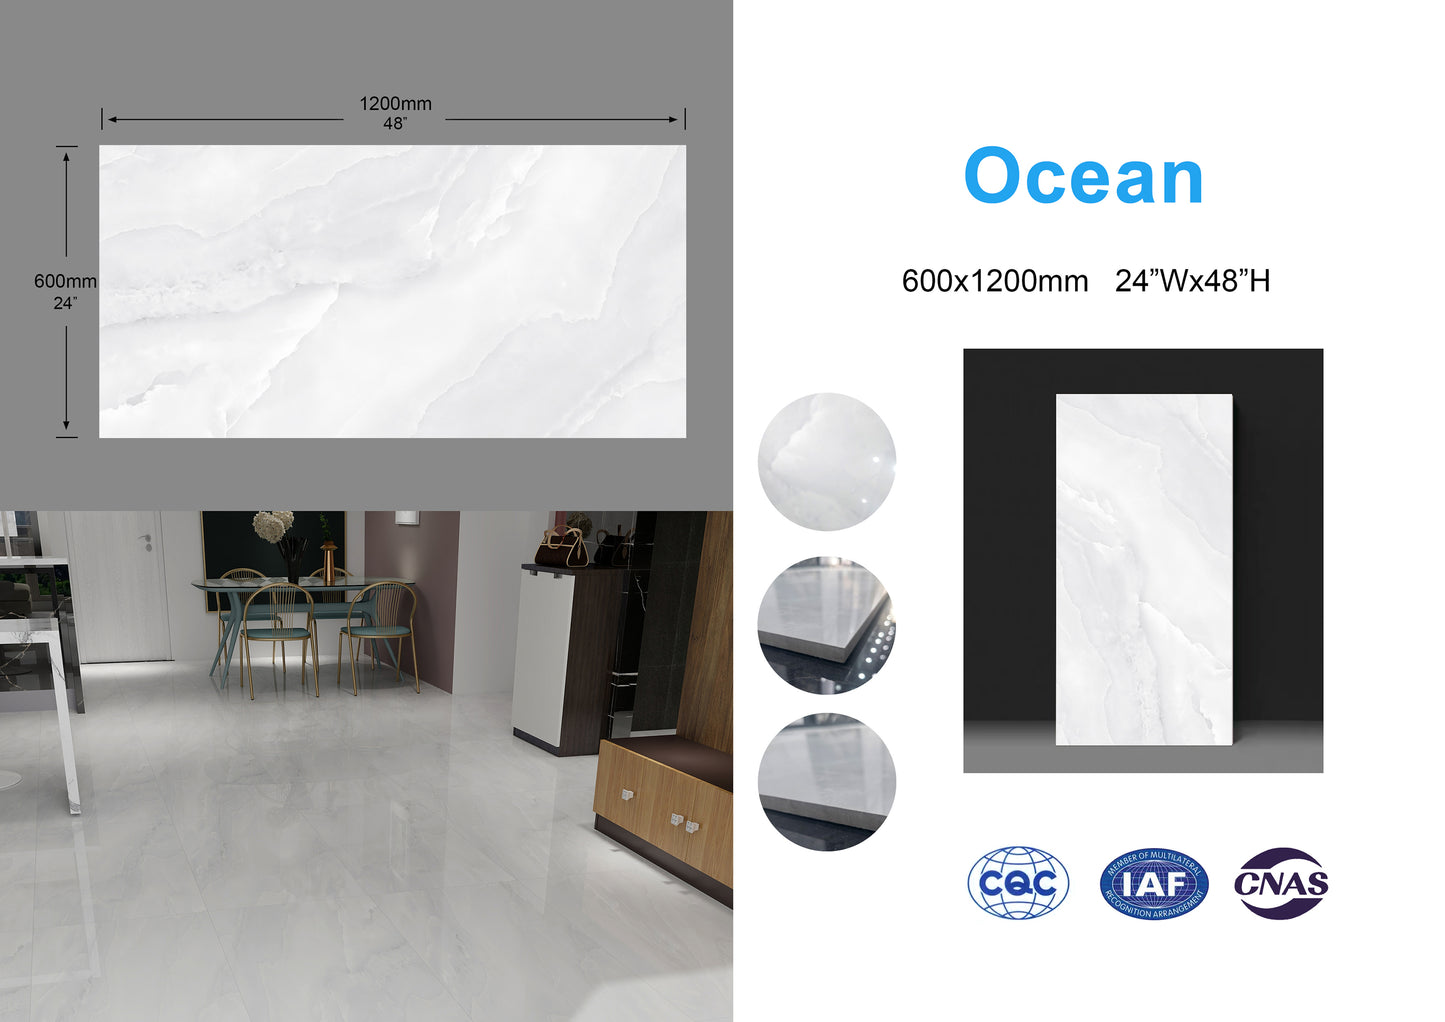 Ocean family Full Polished Glazed Tile light gray 24"x48" 3pcs/box 24sf/box $1.59/sf (15 days return/exchange) Bulk Deal 1000sf+ $1.39/SF(No return/no exchange)